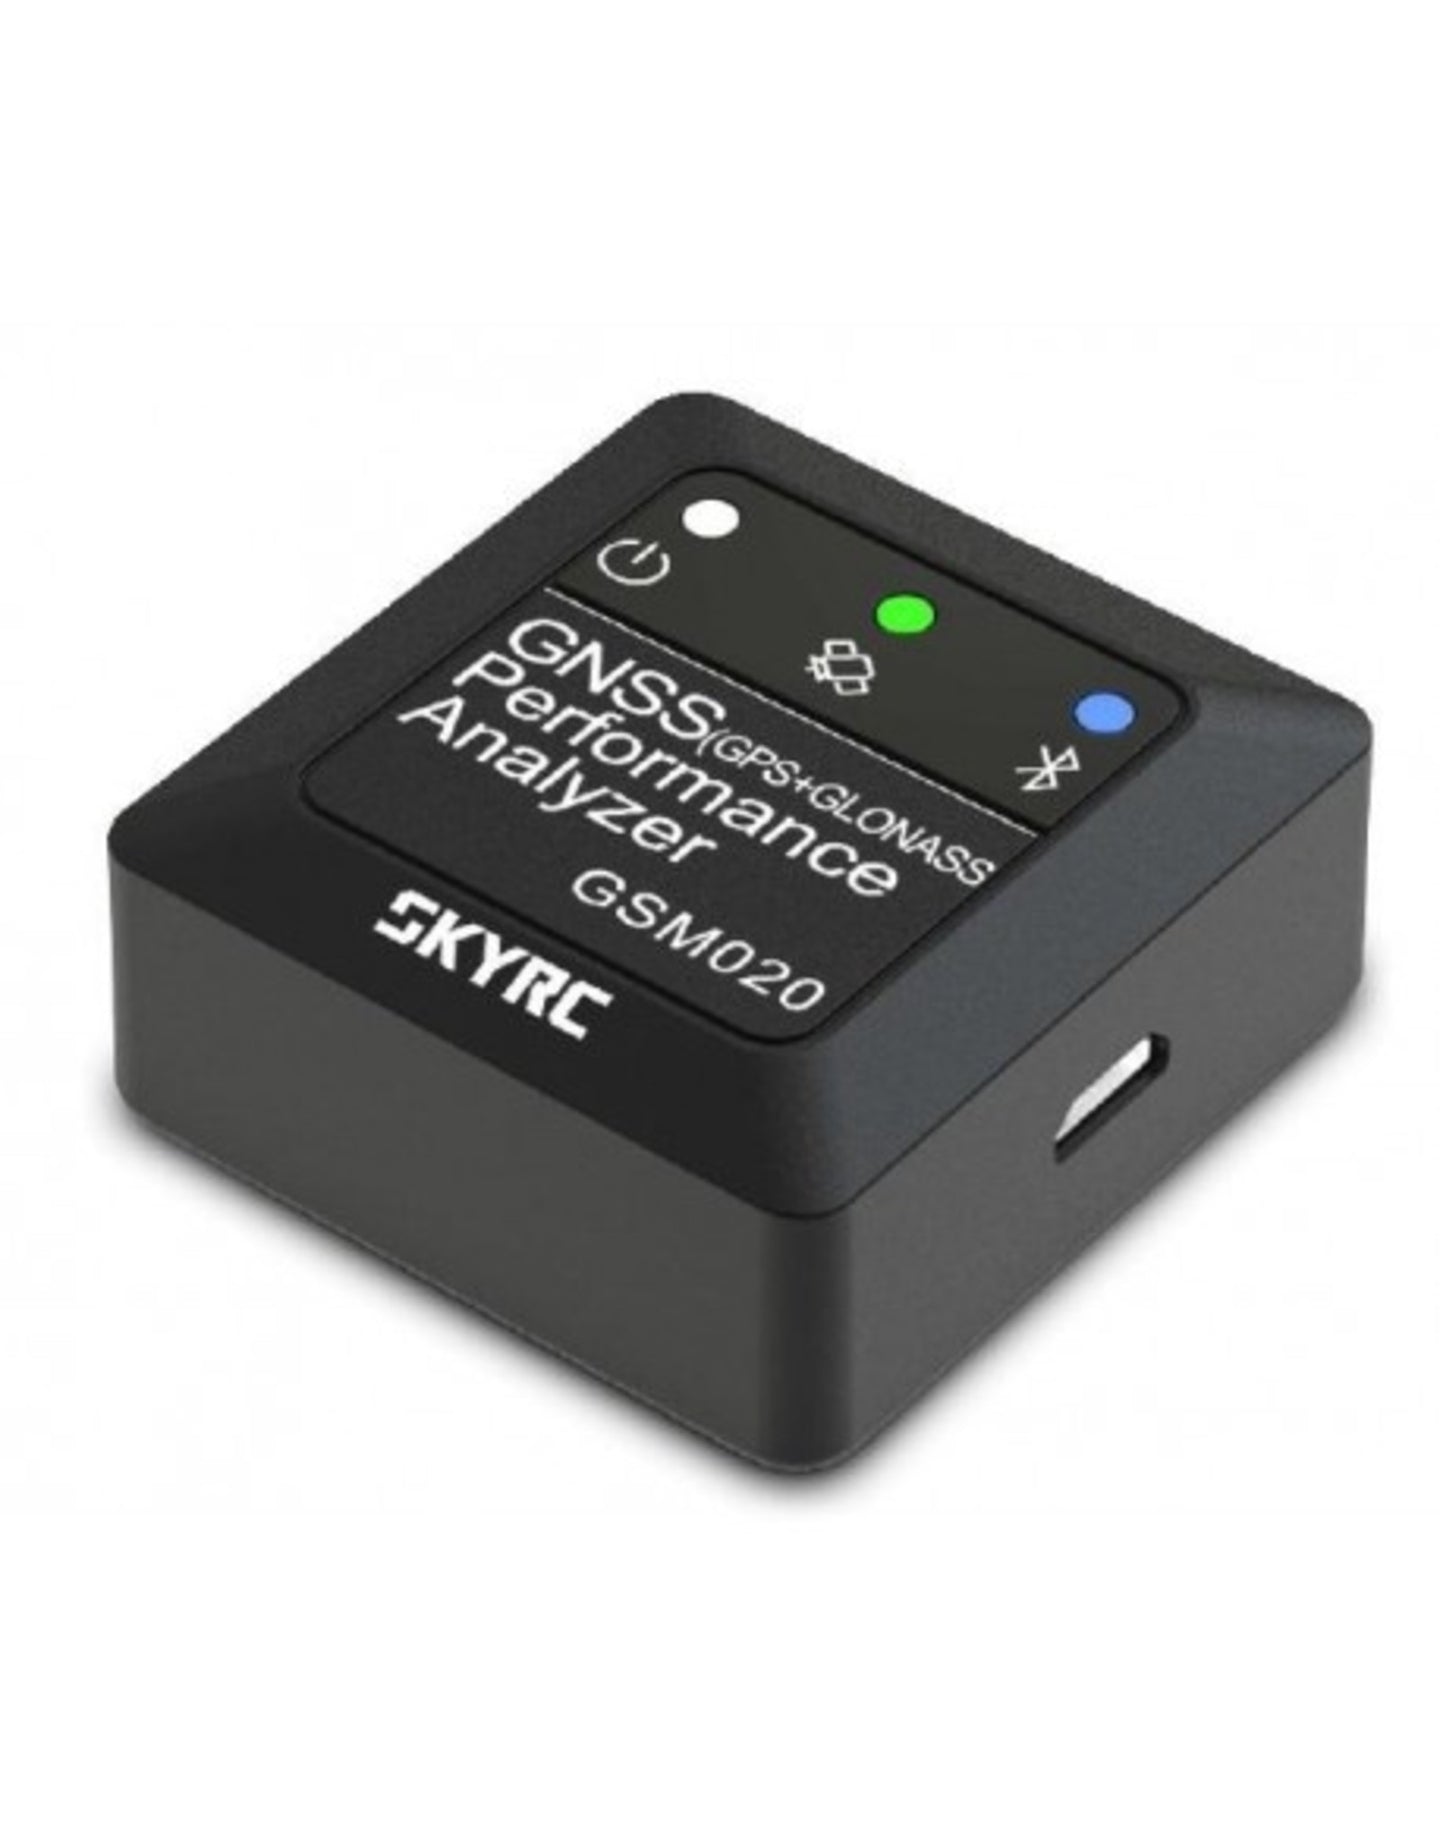 SK-500023-03 GSM020 GNSS PERFORMANCE ANALYZER